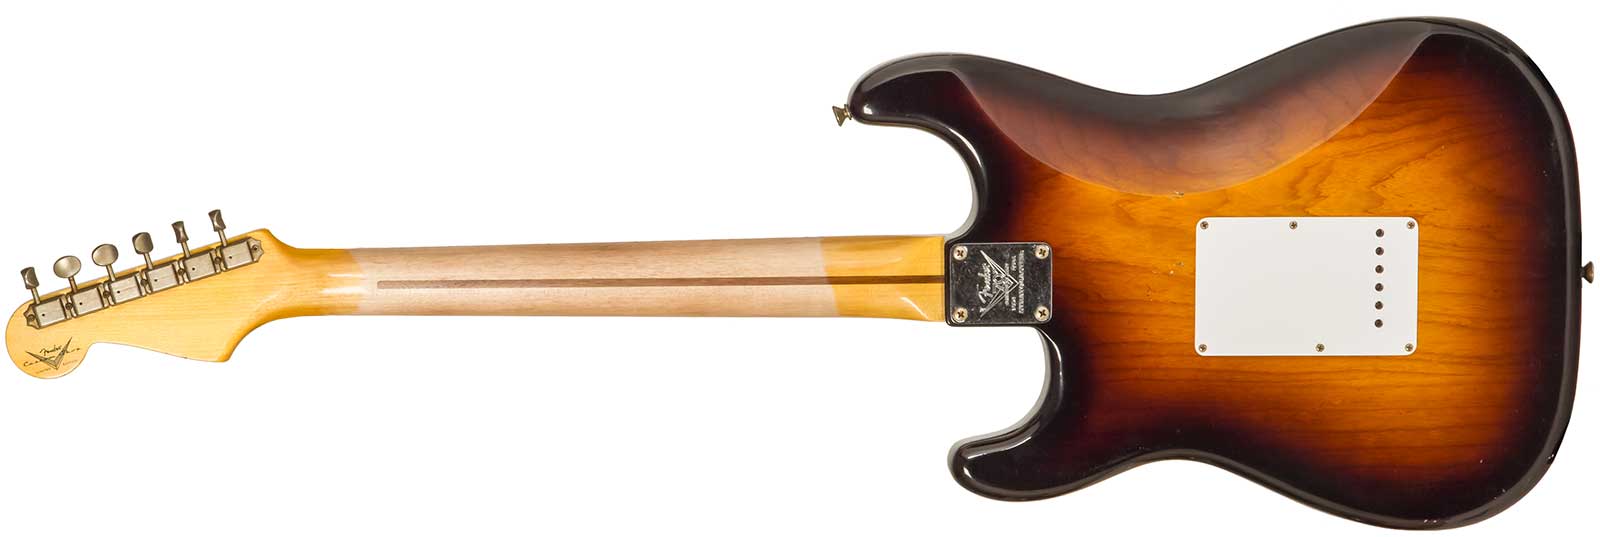 Fender Custom Shop Strat 1954 70th Anniv. 3s Trem Mn #xn4199 - Journeyman Relic Wide-fade 2-color Sunburst - Str shape electric guitar - Variation 1